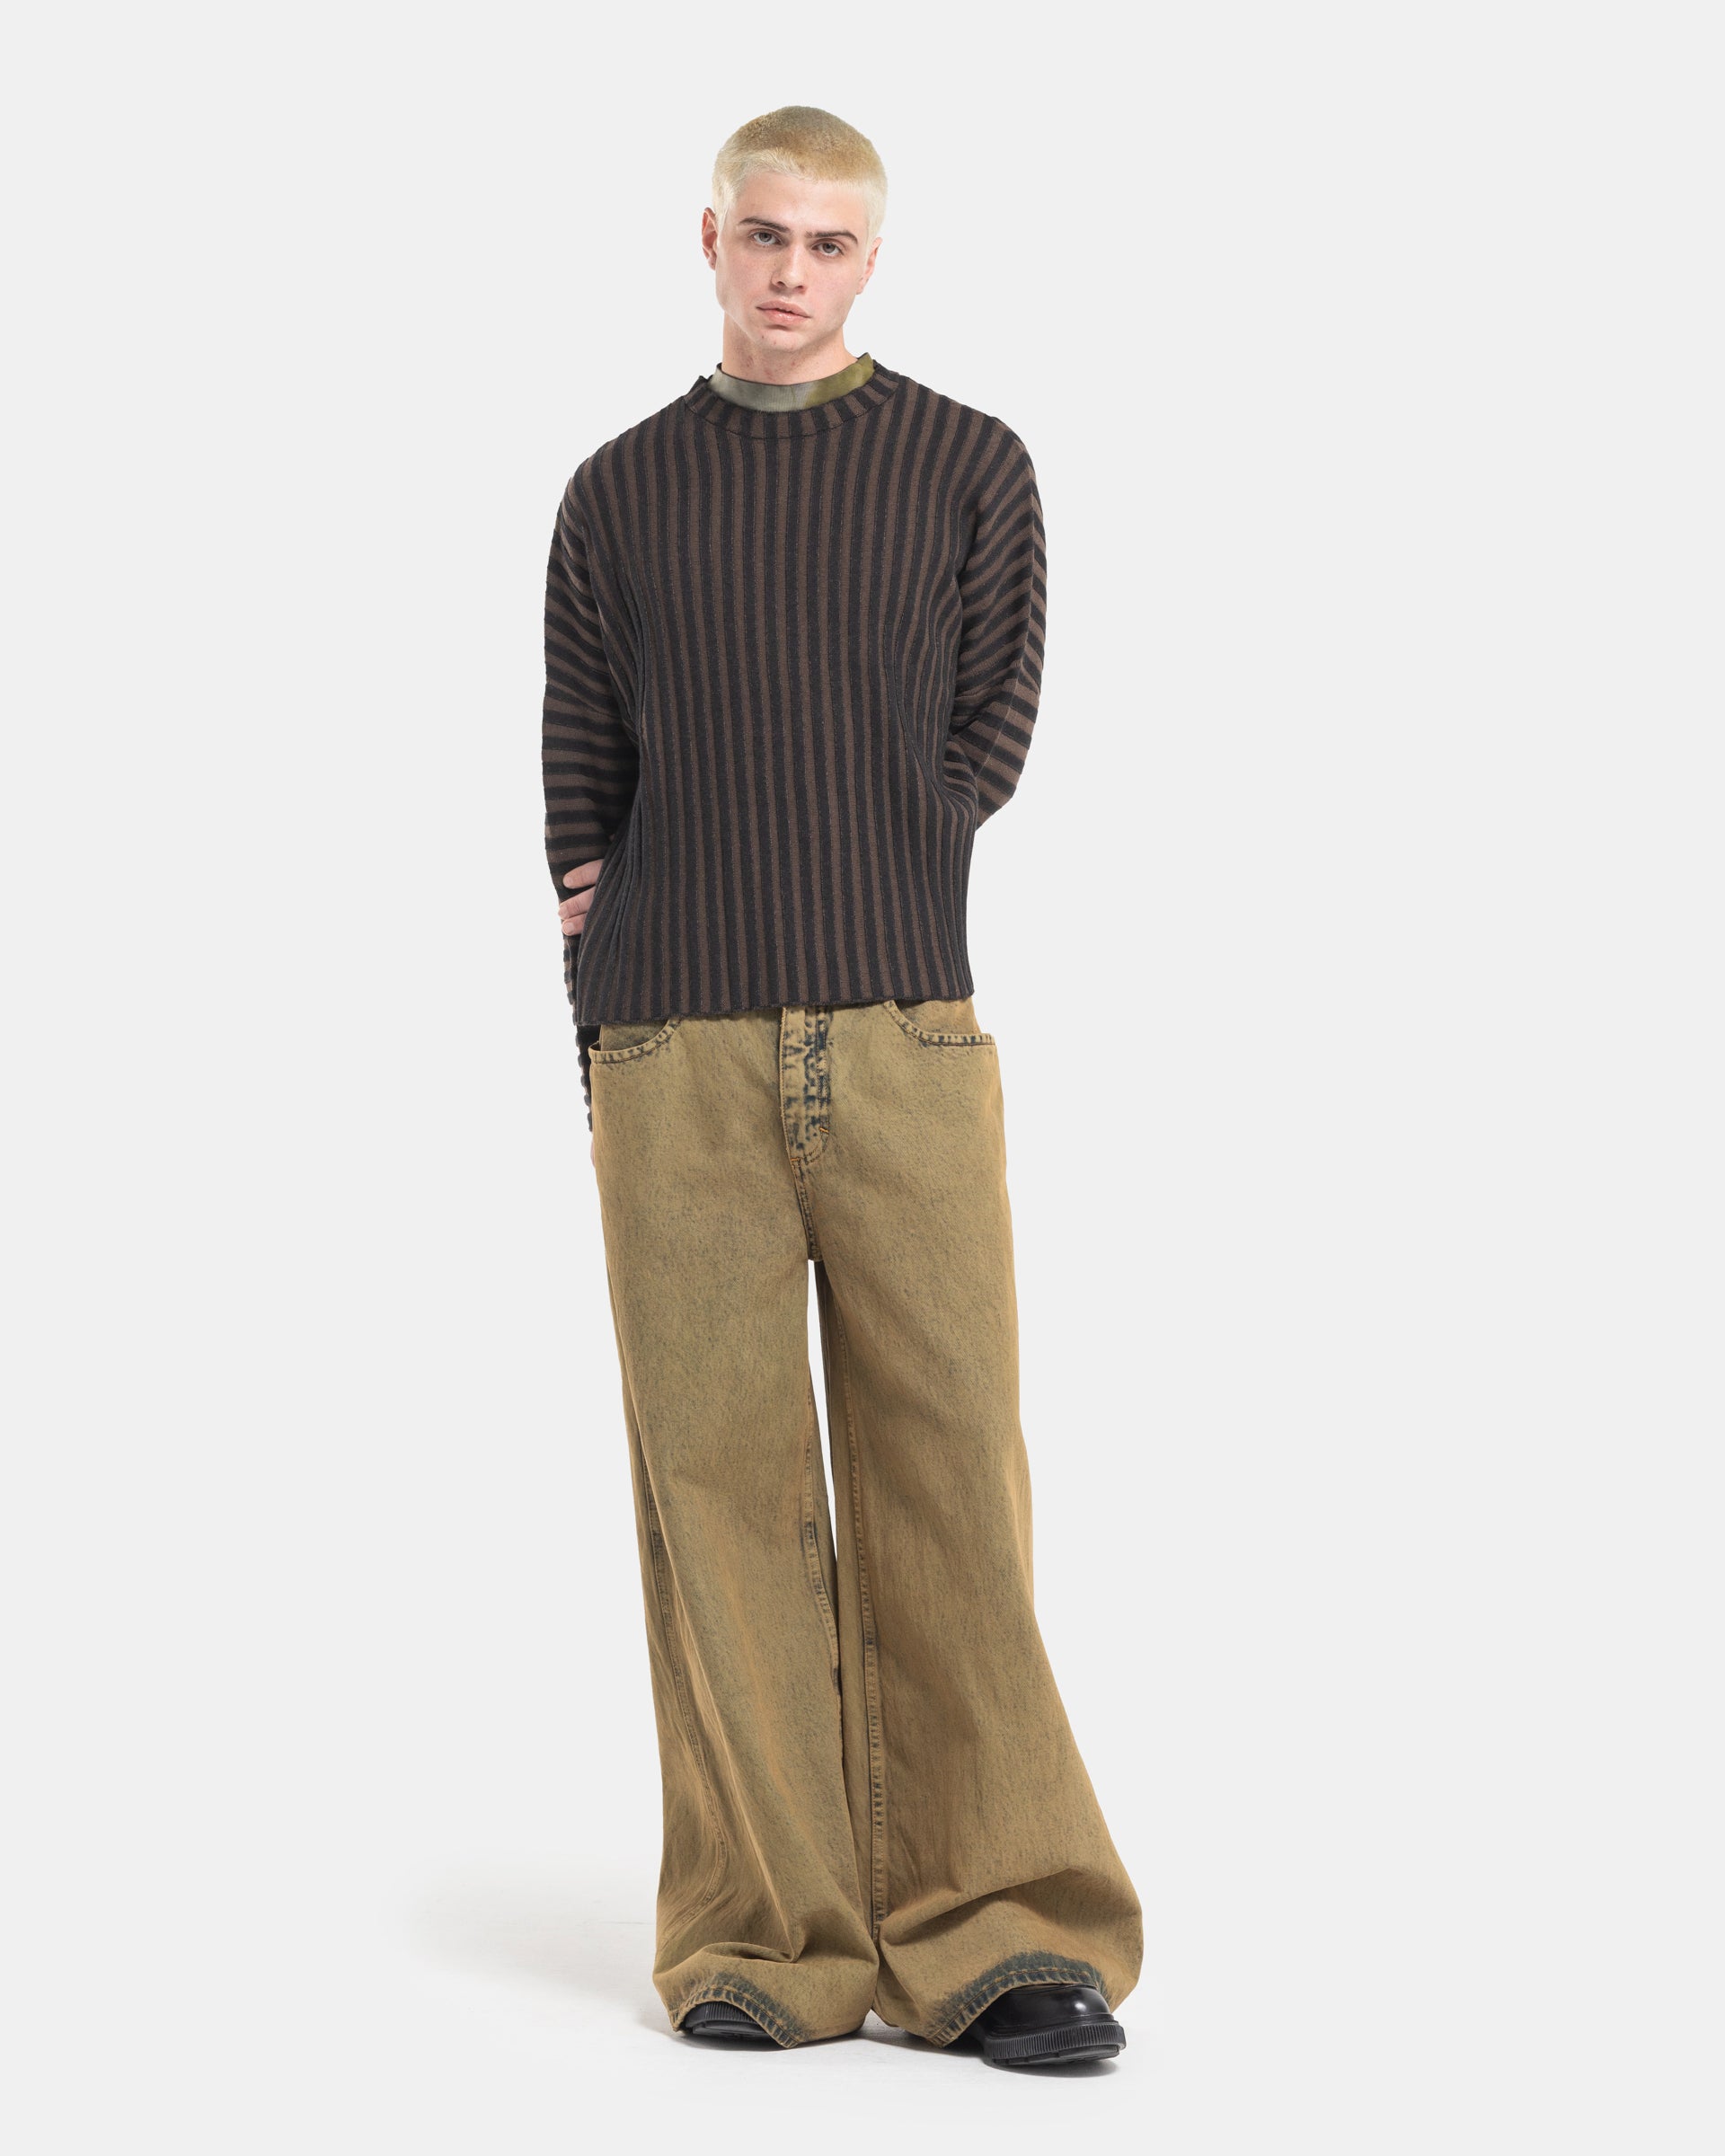 Male model wearing Eckhaus Latta Designer Wool Brown Sweater with knit stripes